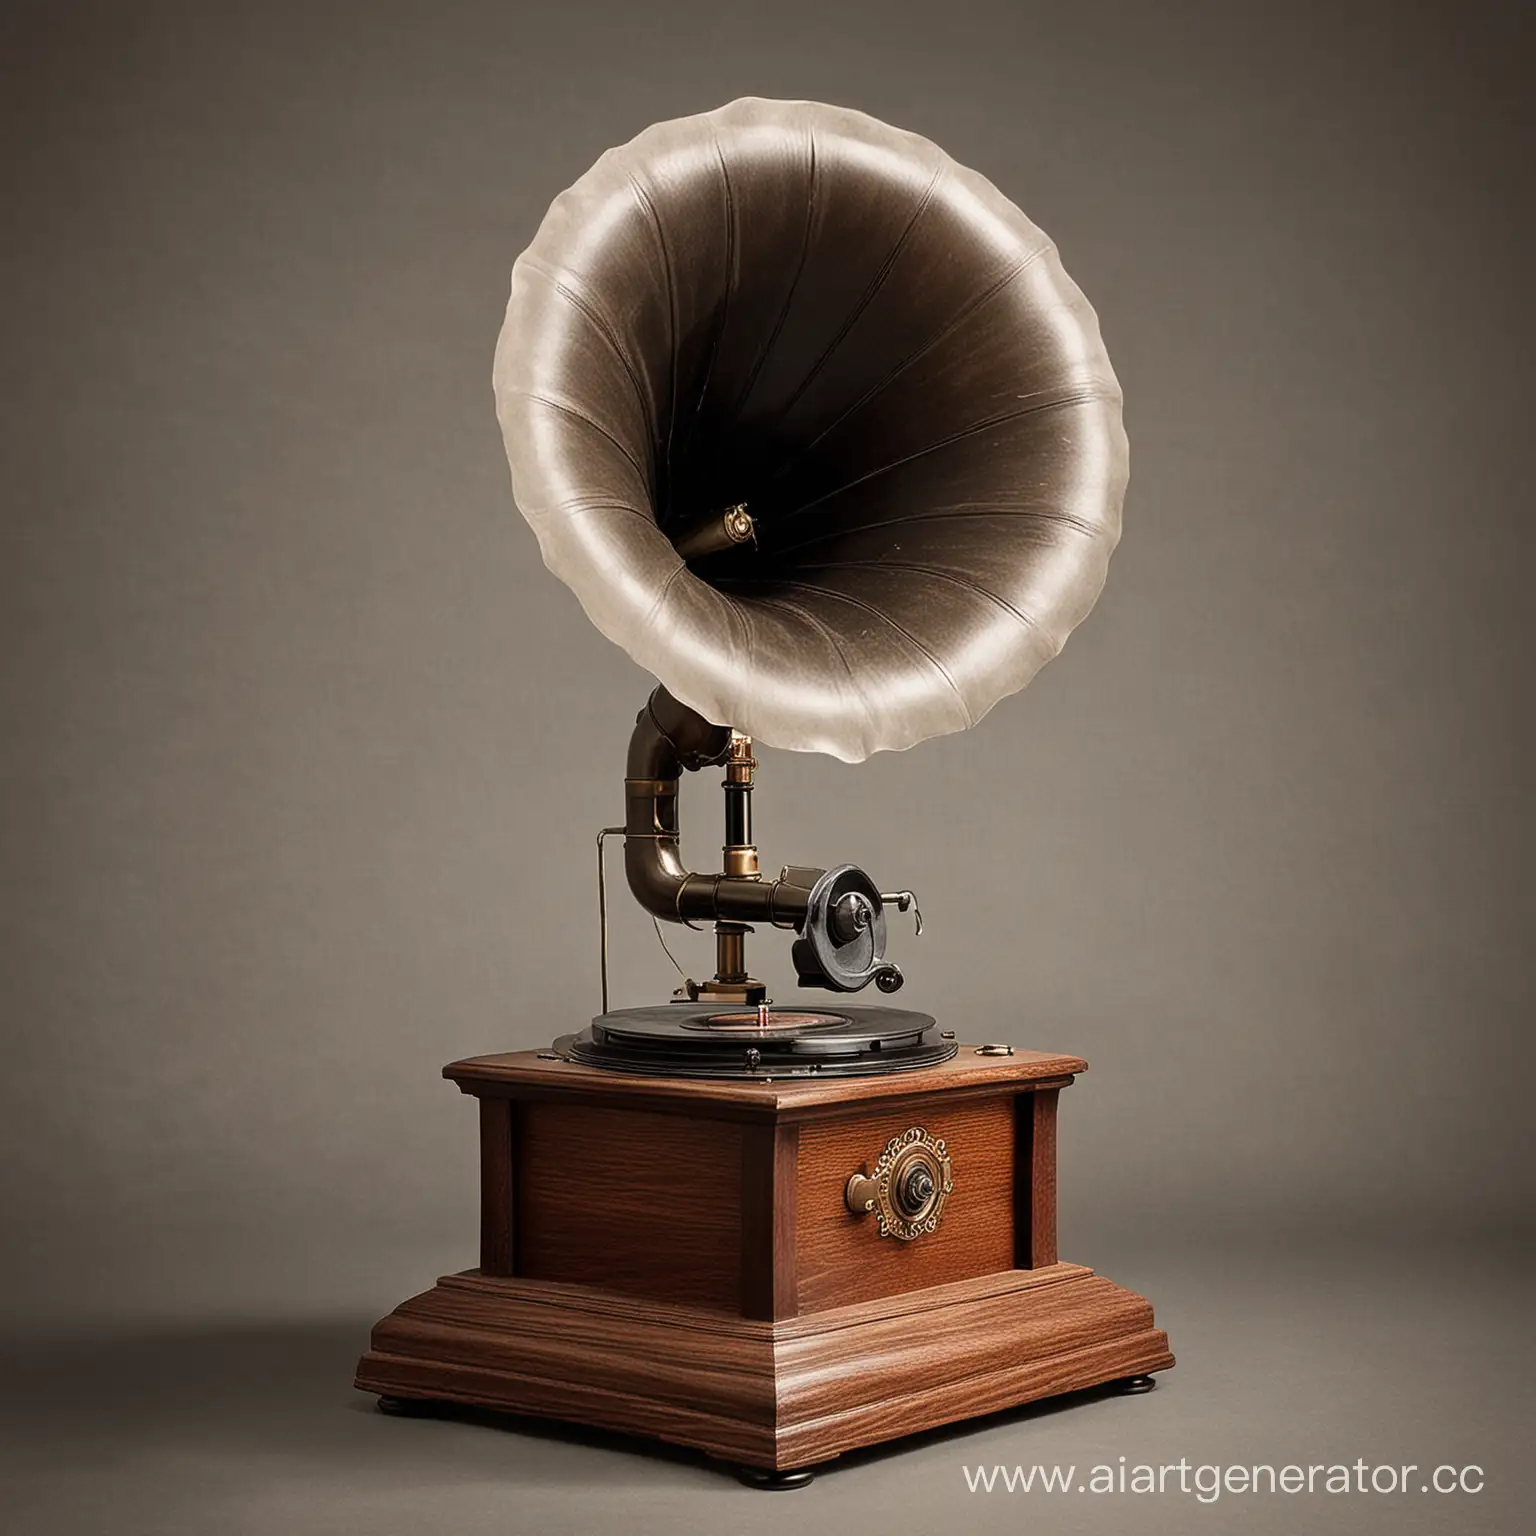 Historic-Phonograph-Invention-by-Thomas-Edison-November-21-1877